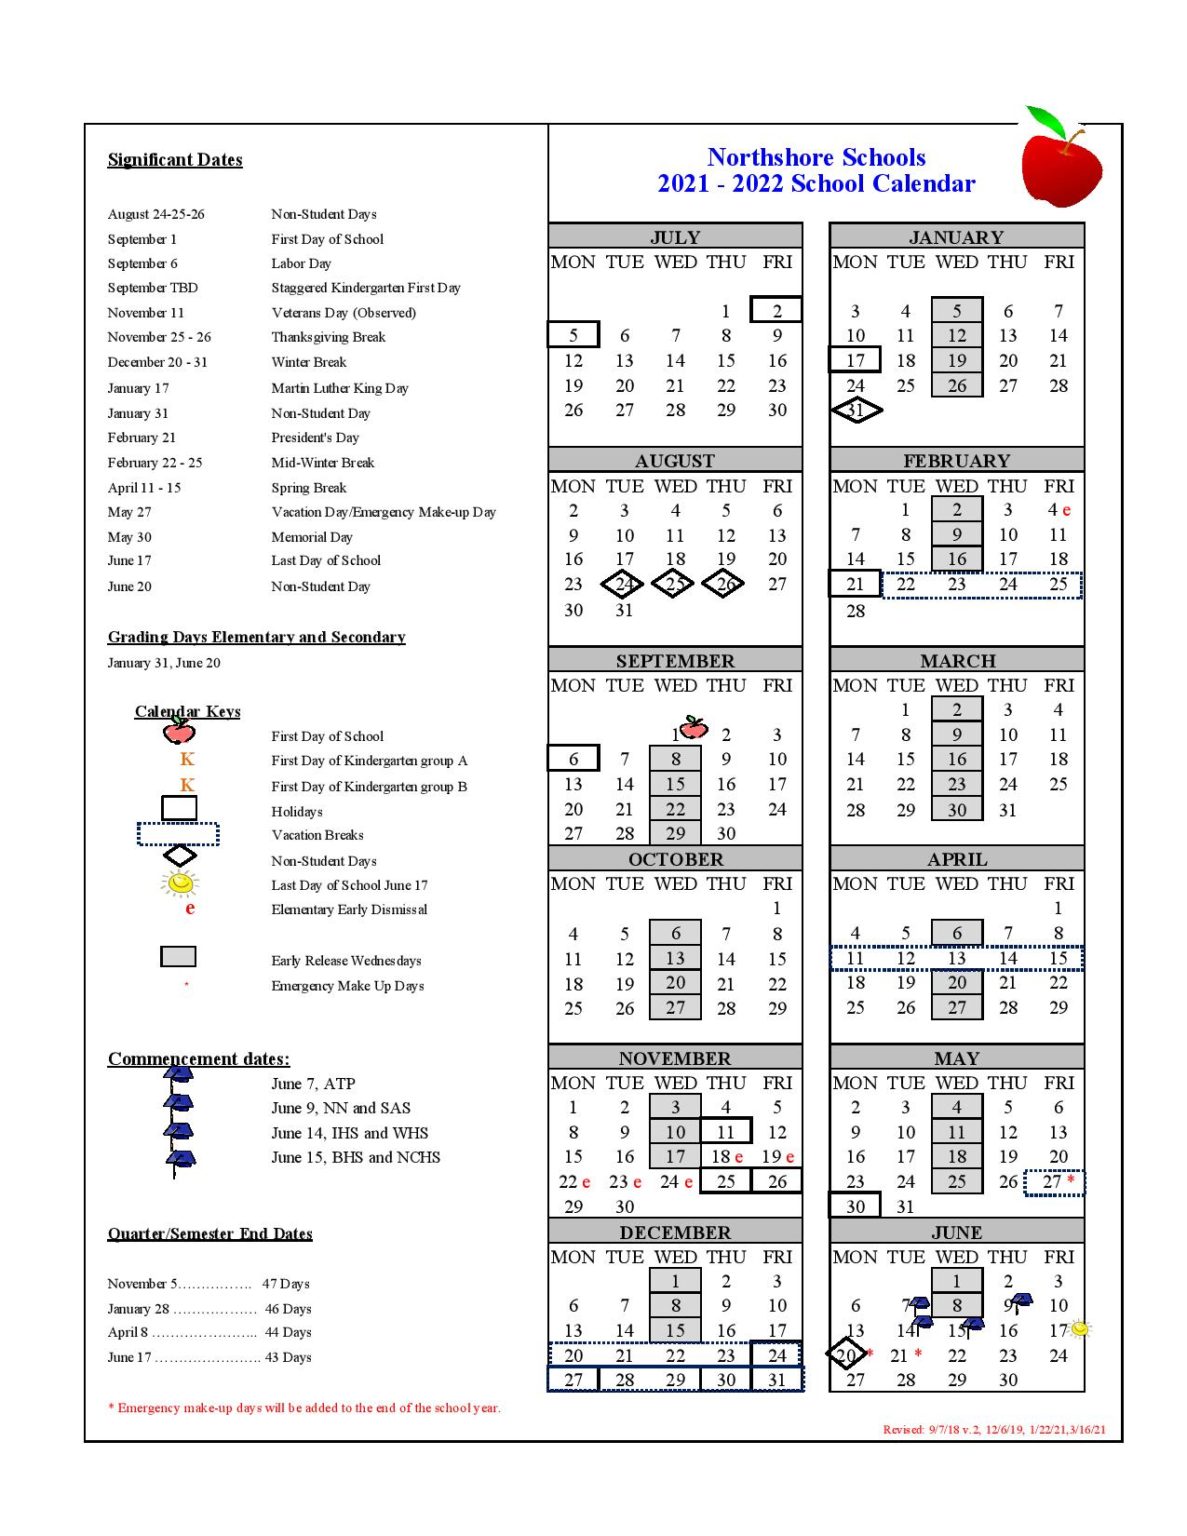 Northshore School District Calendar 2021-2022 & Holidays